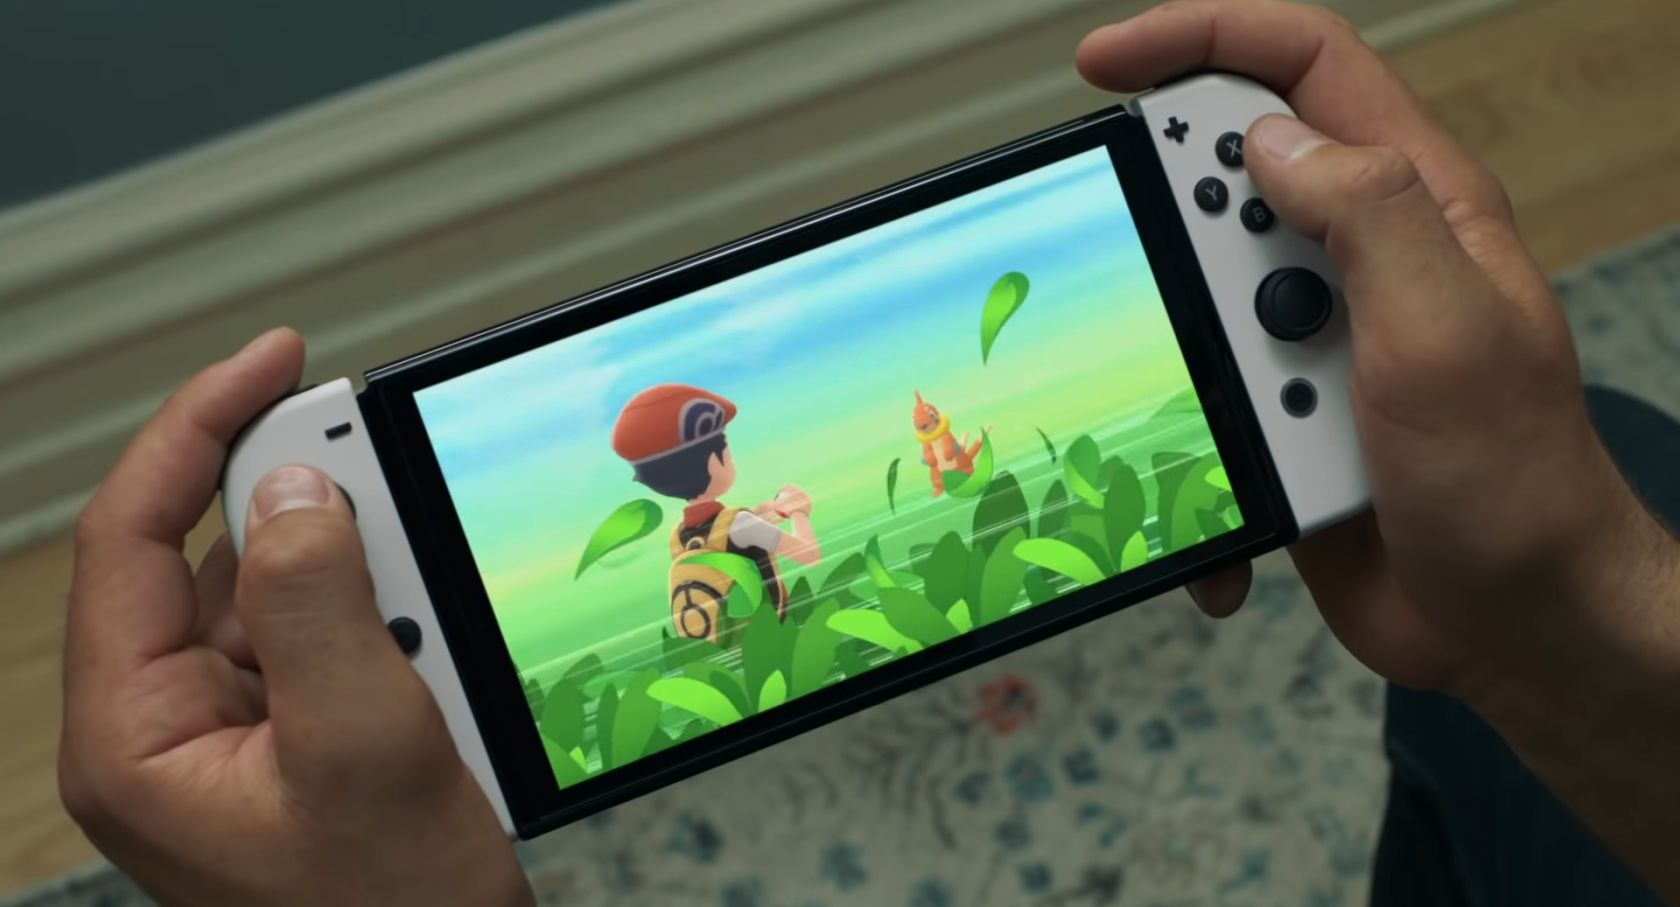 Gaming on Nintendo Switch OLED model